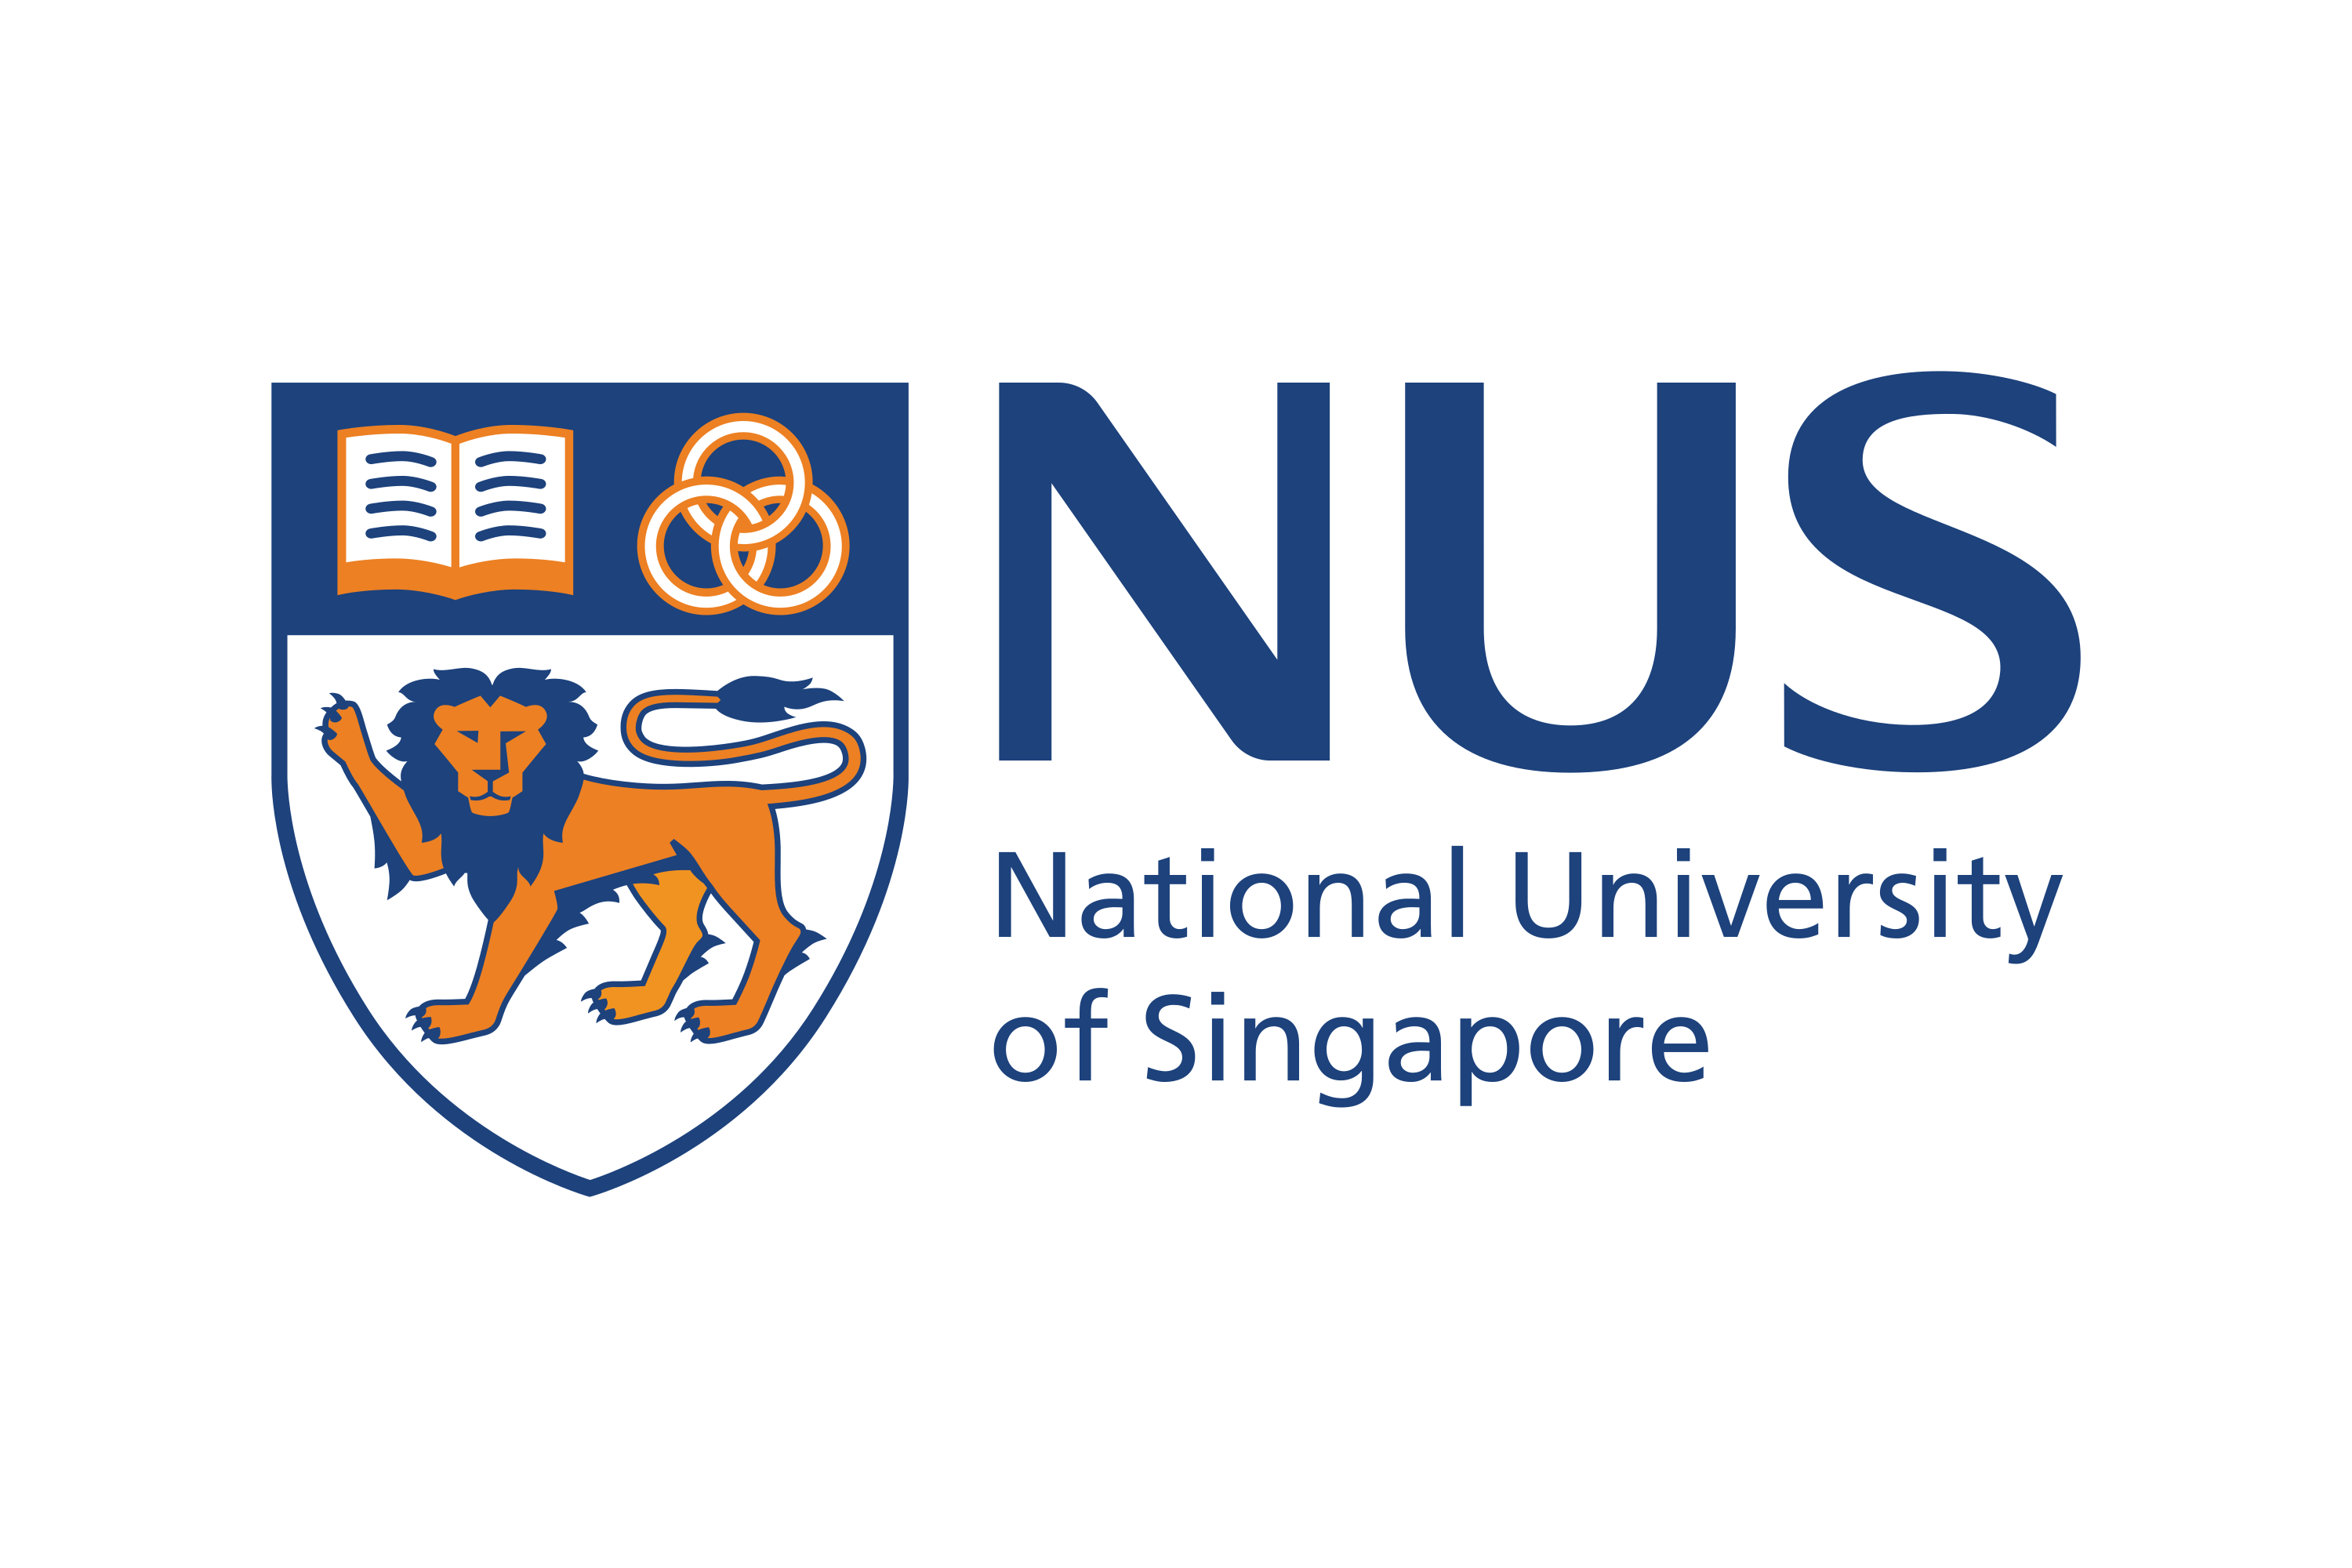 Lataa National University of Singapore (NUS) -logo SVG-vektorissa tai ...